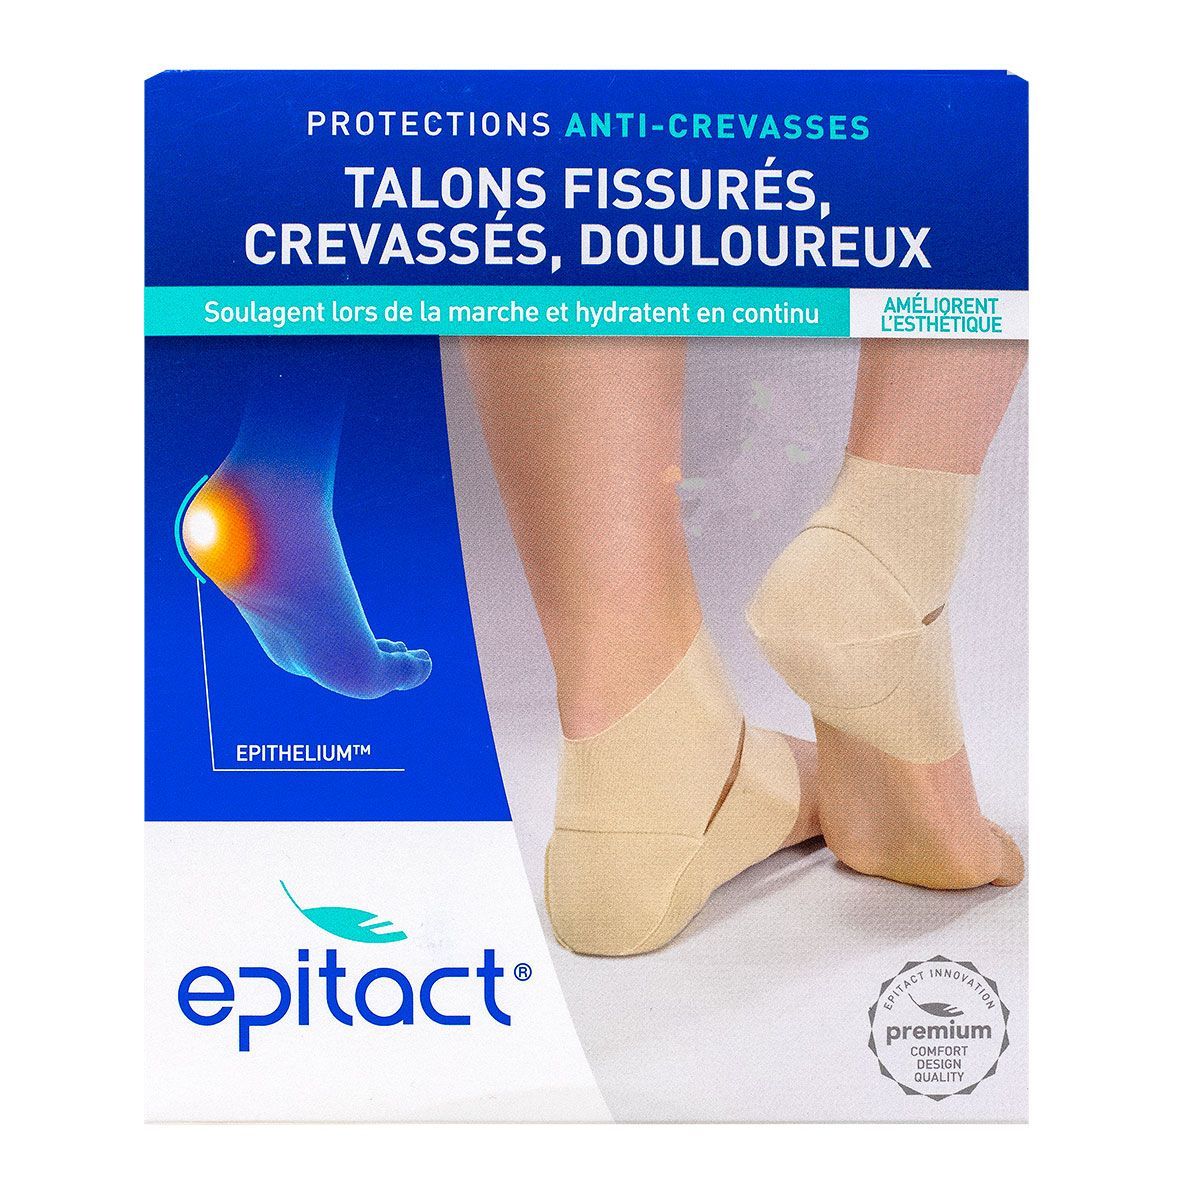 Protections anti-crevasses Epitact